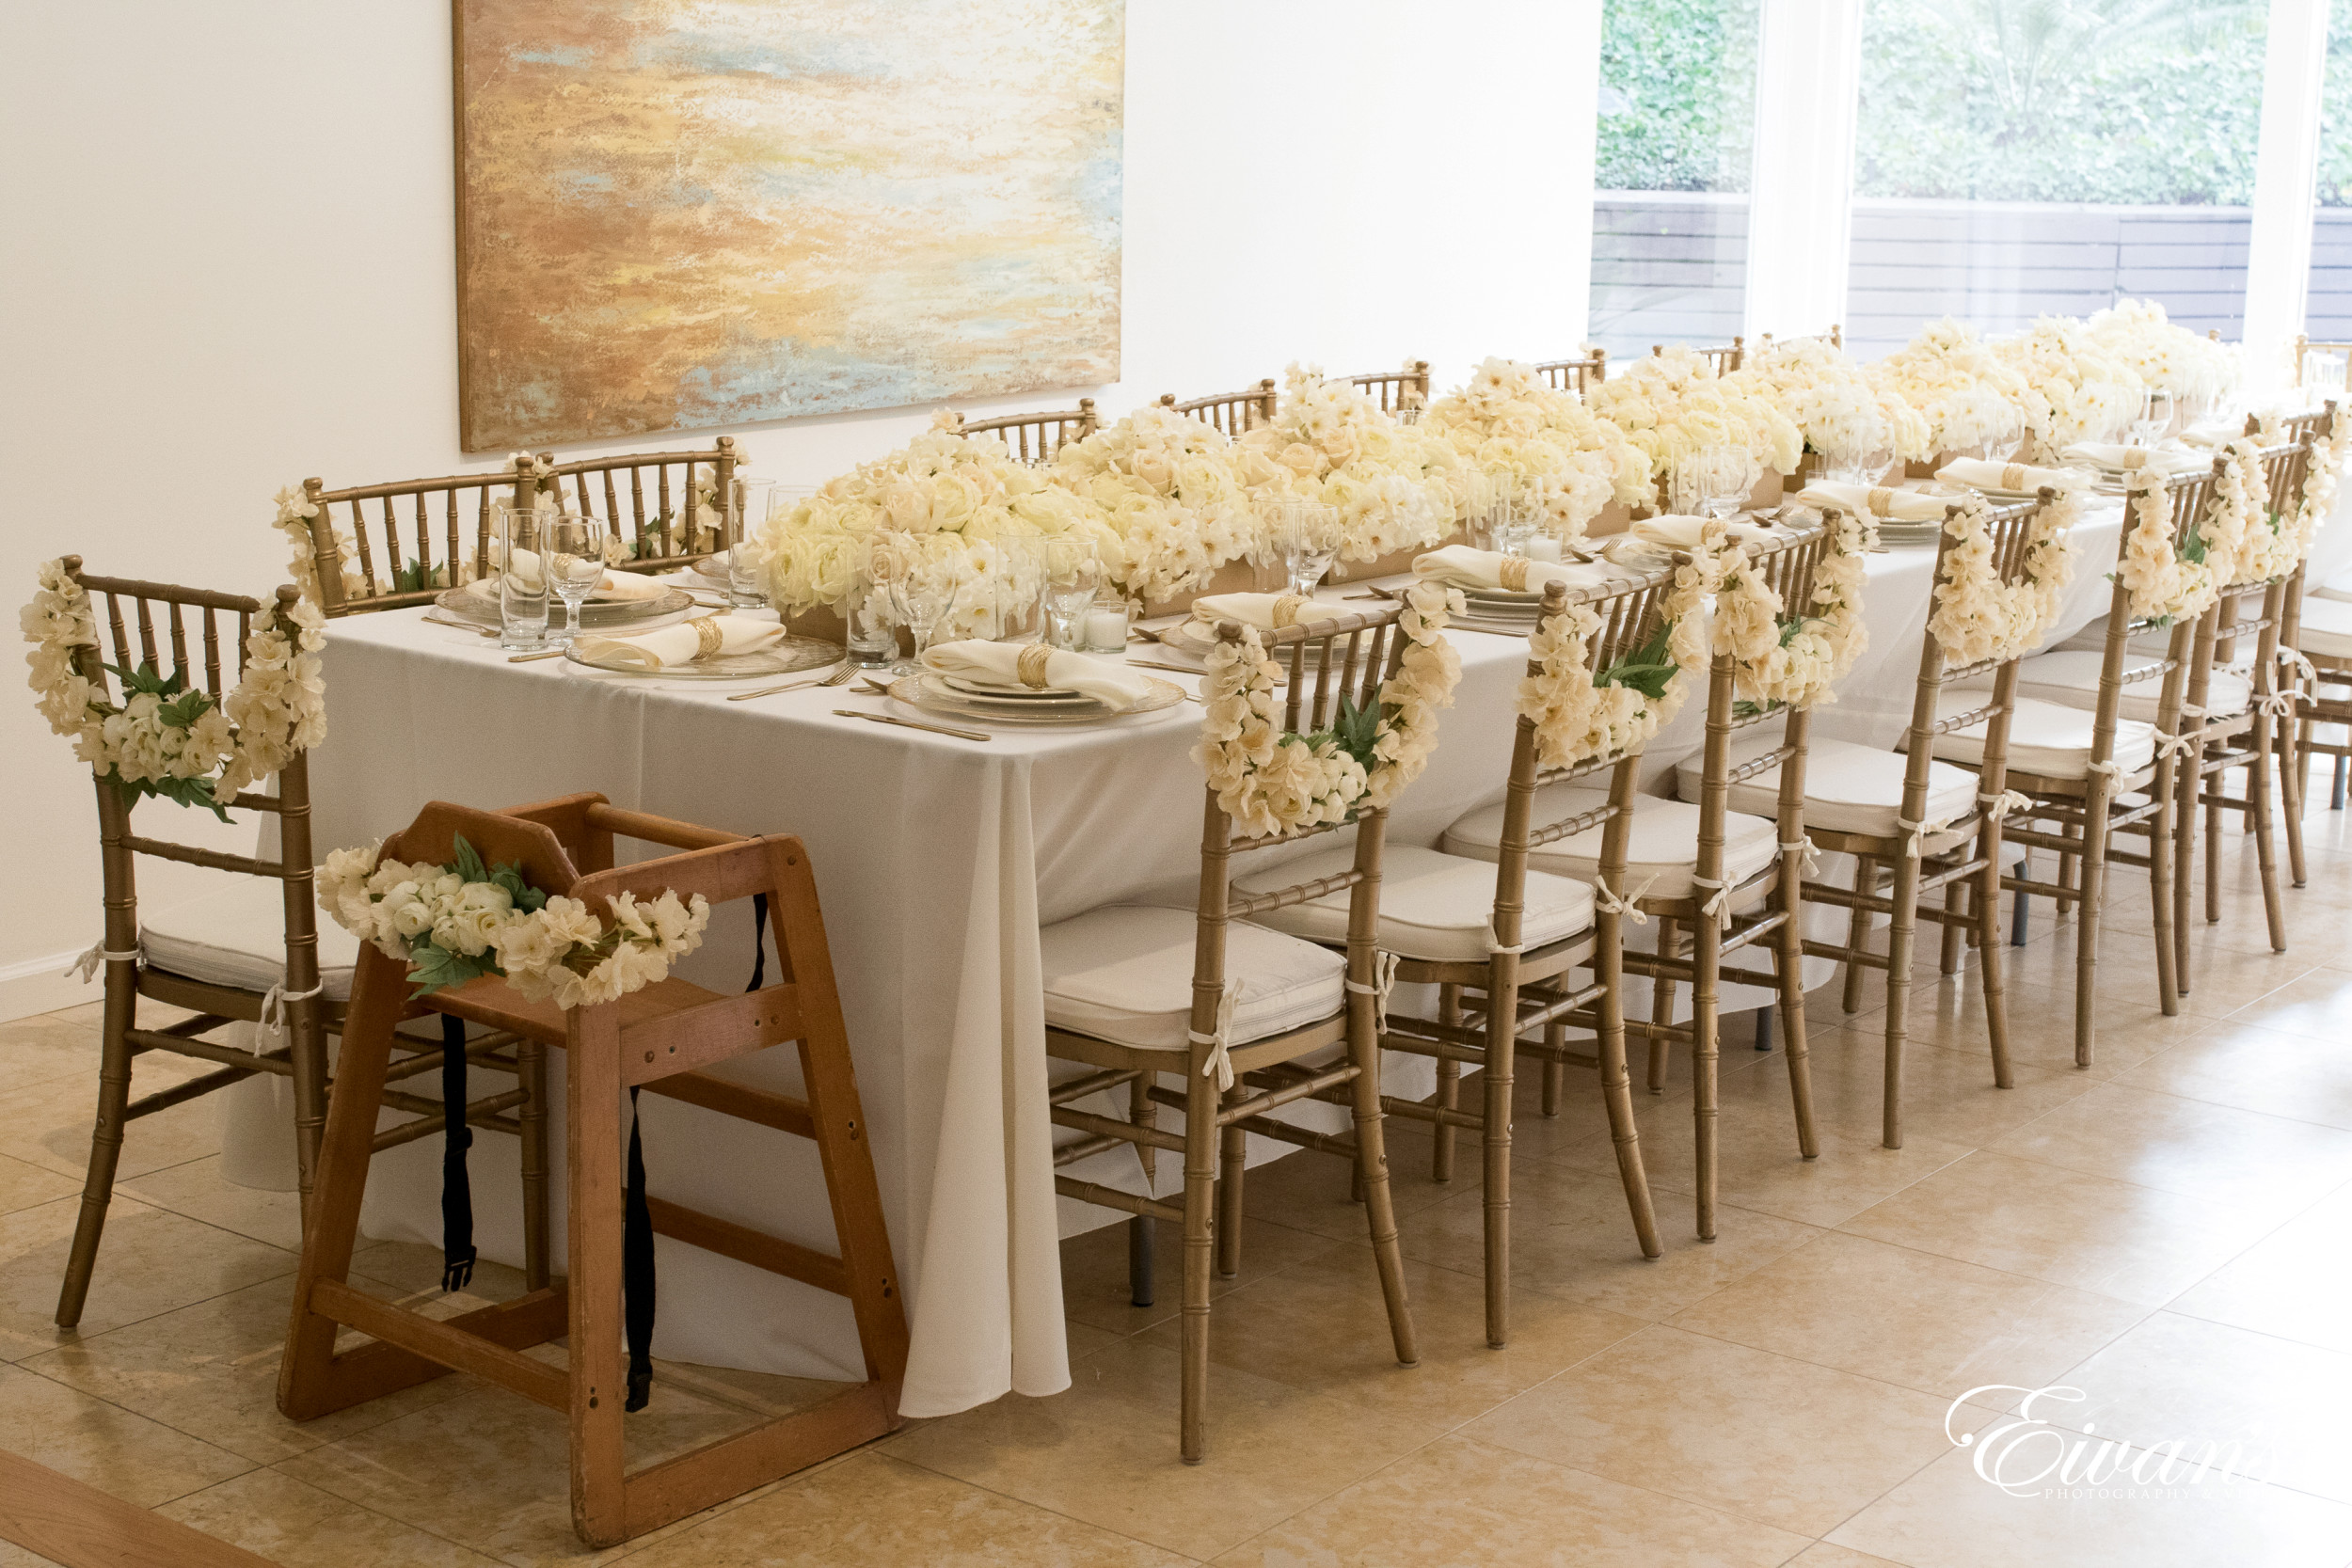 10 Fun ideas to make your small wedding still a flair | Eivan's Photo Inc.